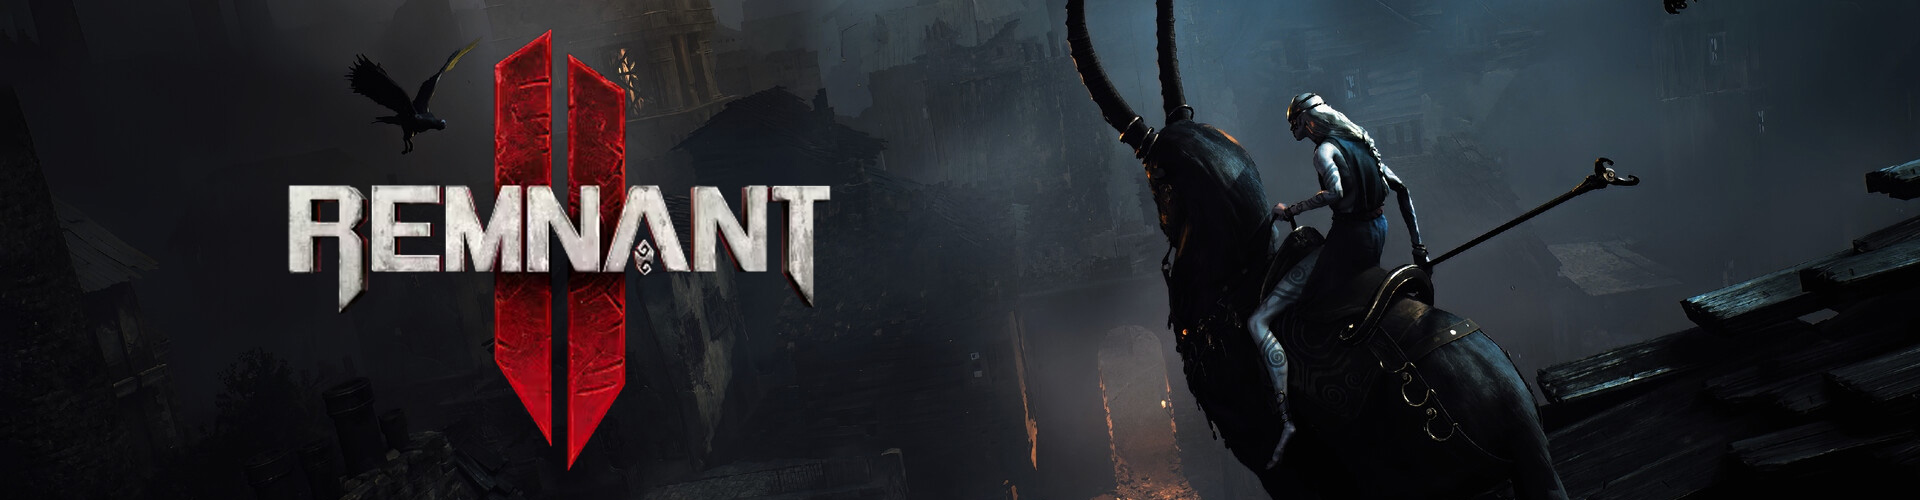 Remnant 2: Ein Souls-Like Multiplayer-Horrorspiel